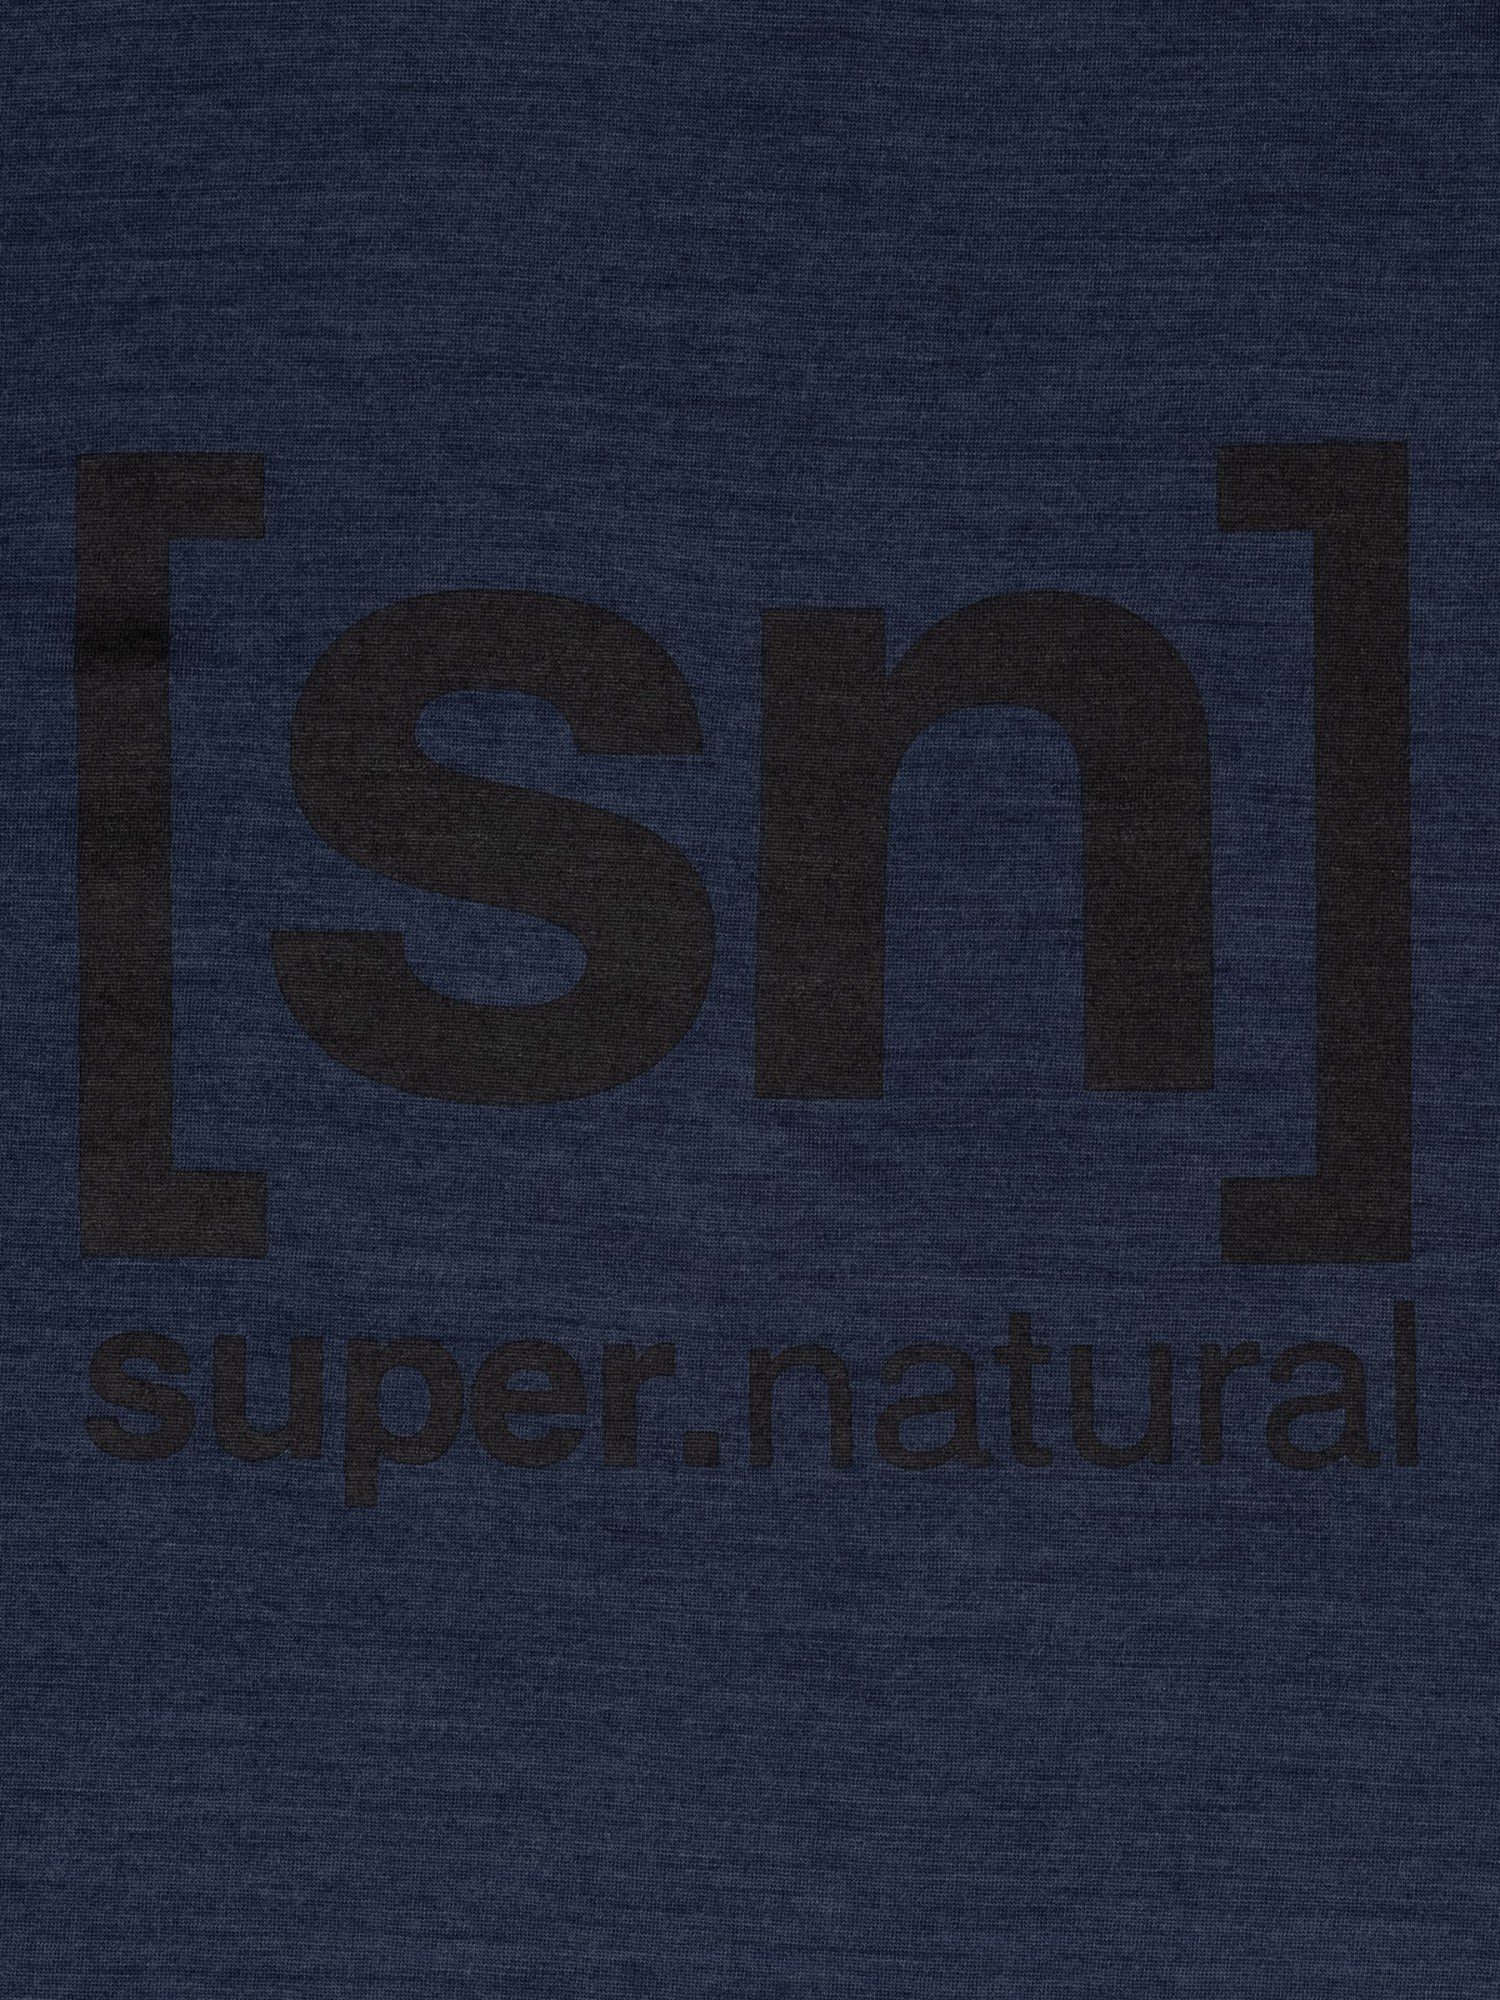 SUPER.NATURAL T-Shirt Super.natural Grey Herren M Black Melange Kurzarm-Shirt - Blue Iris Tee Logo Logo